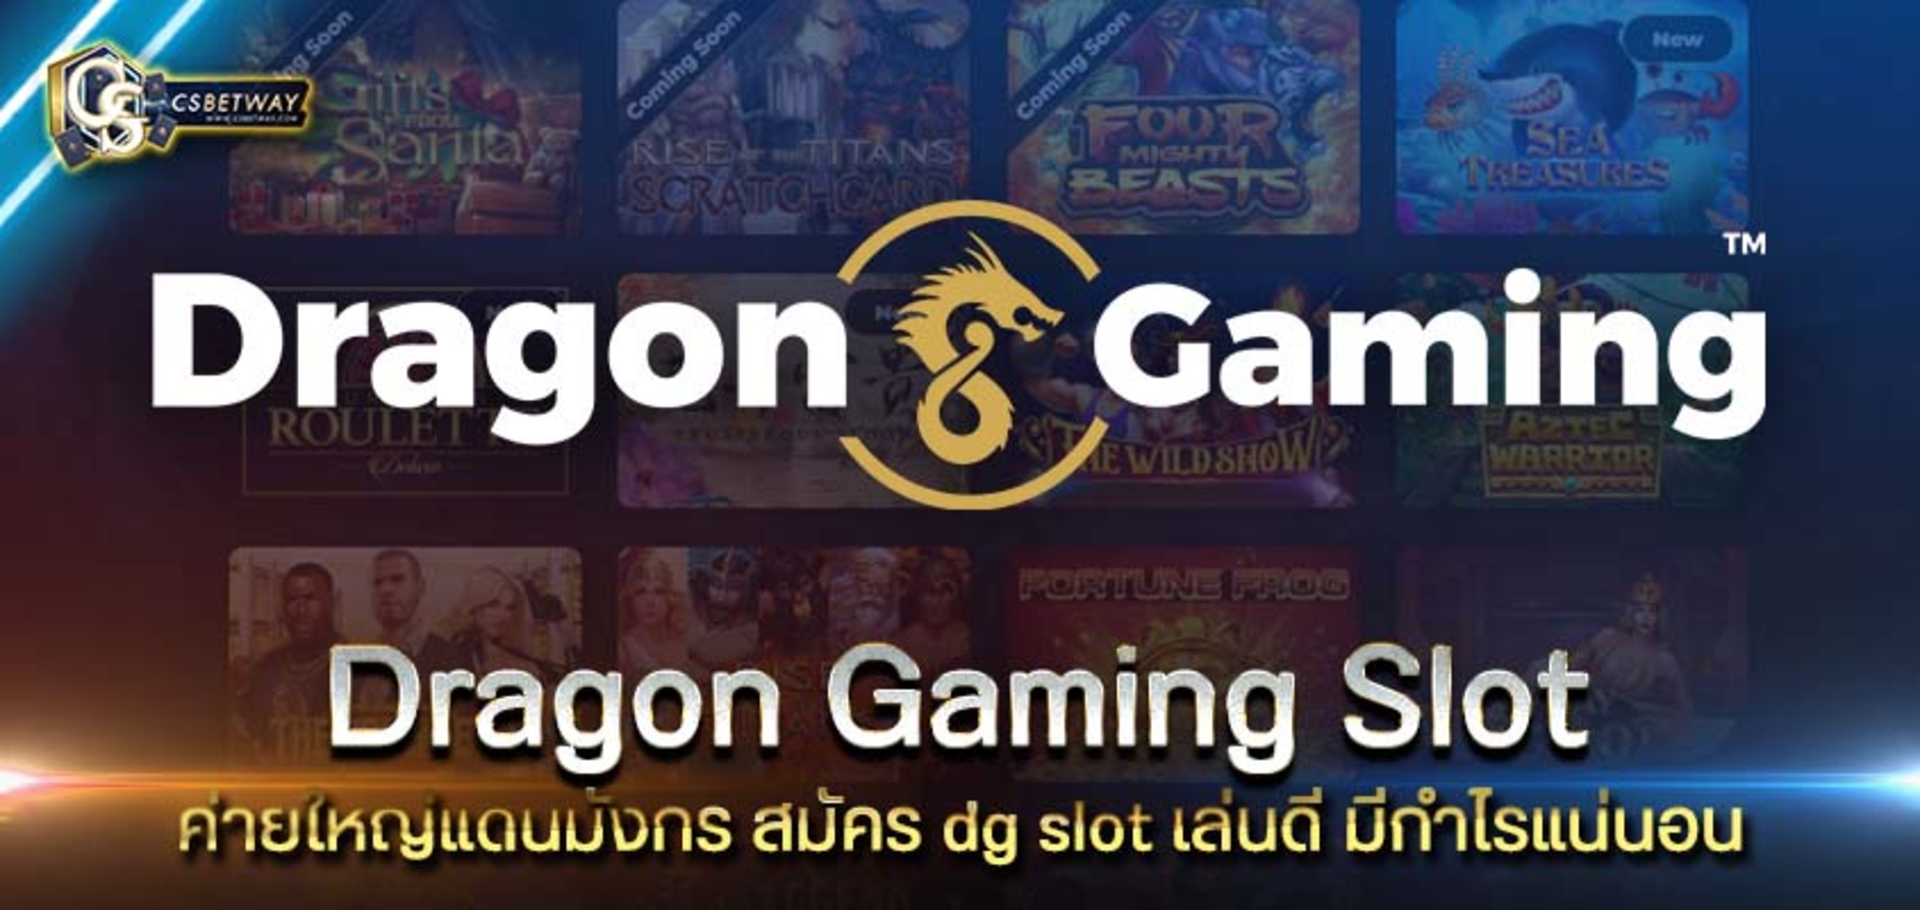 Dragon Gaming Slot ค่ายใหญ่แดนมังกร สมัคร dg slot เล่นดี มีกำไรแน่นอน